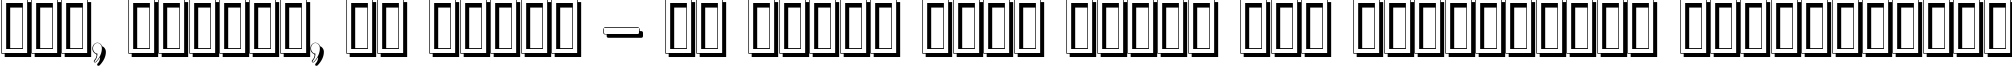 Пример написания шрифтом Epoque Shadow текста на украинском